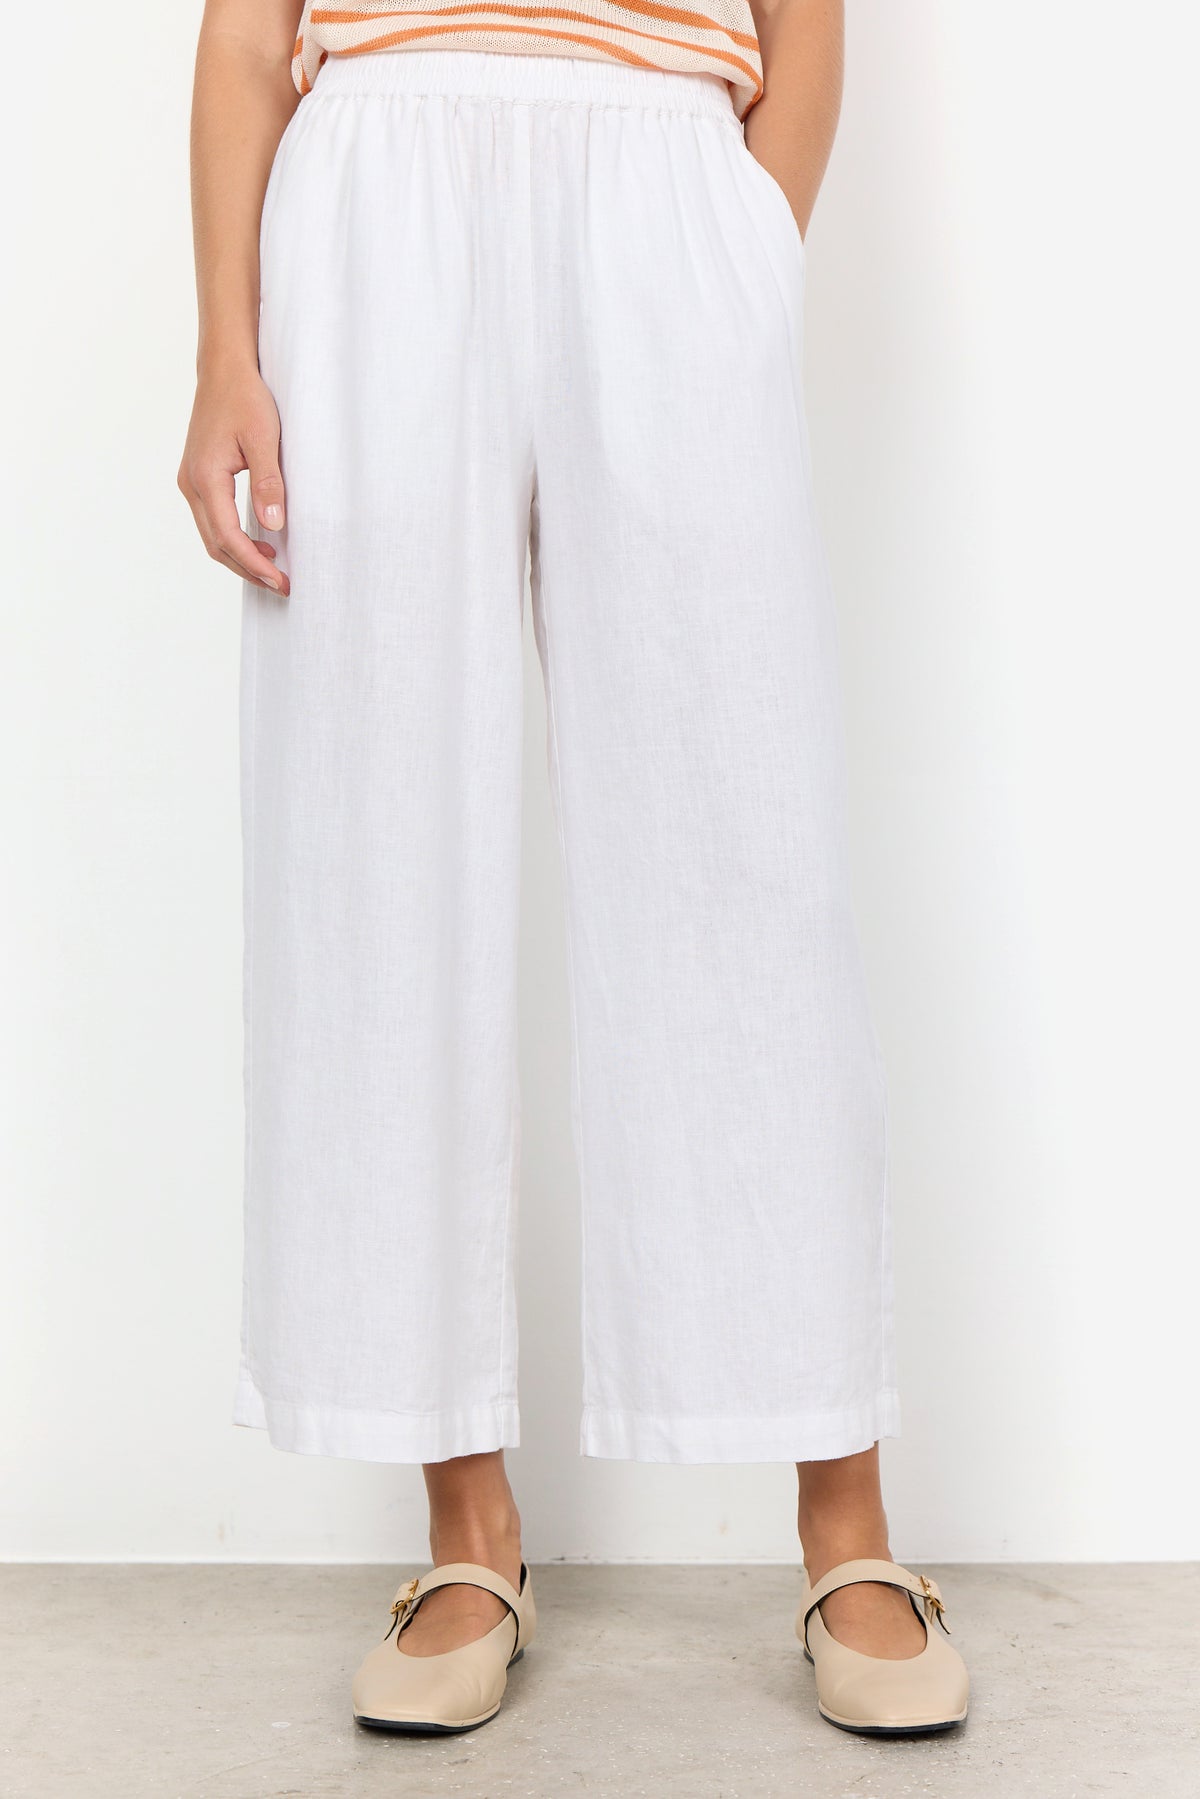 Soya Concept Pants 17370-WHITE